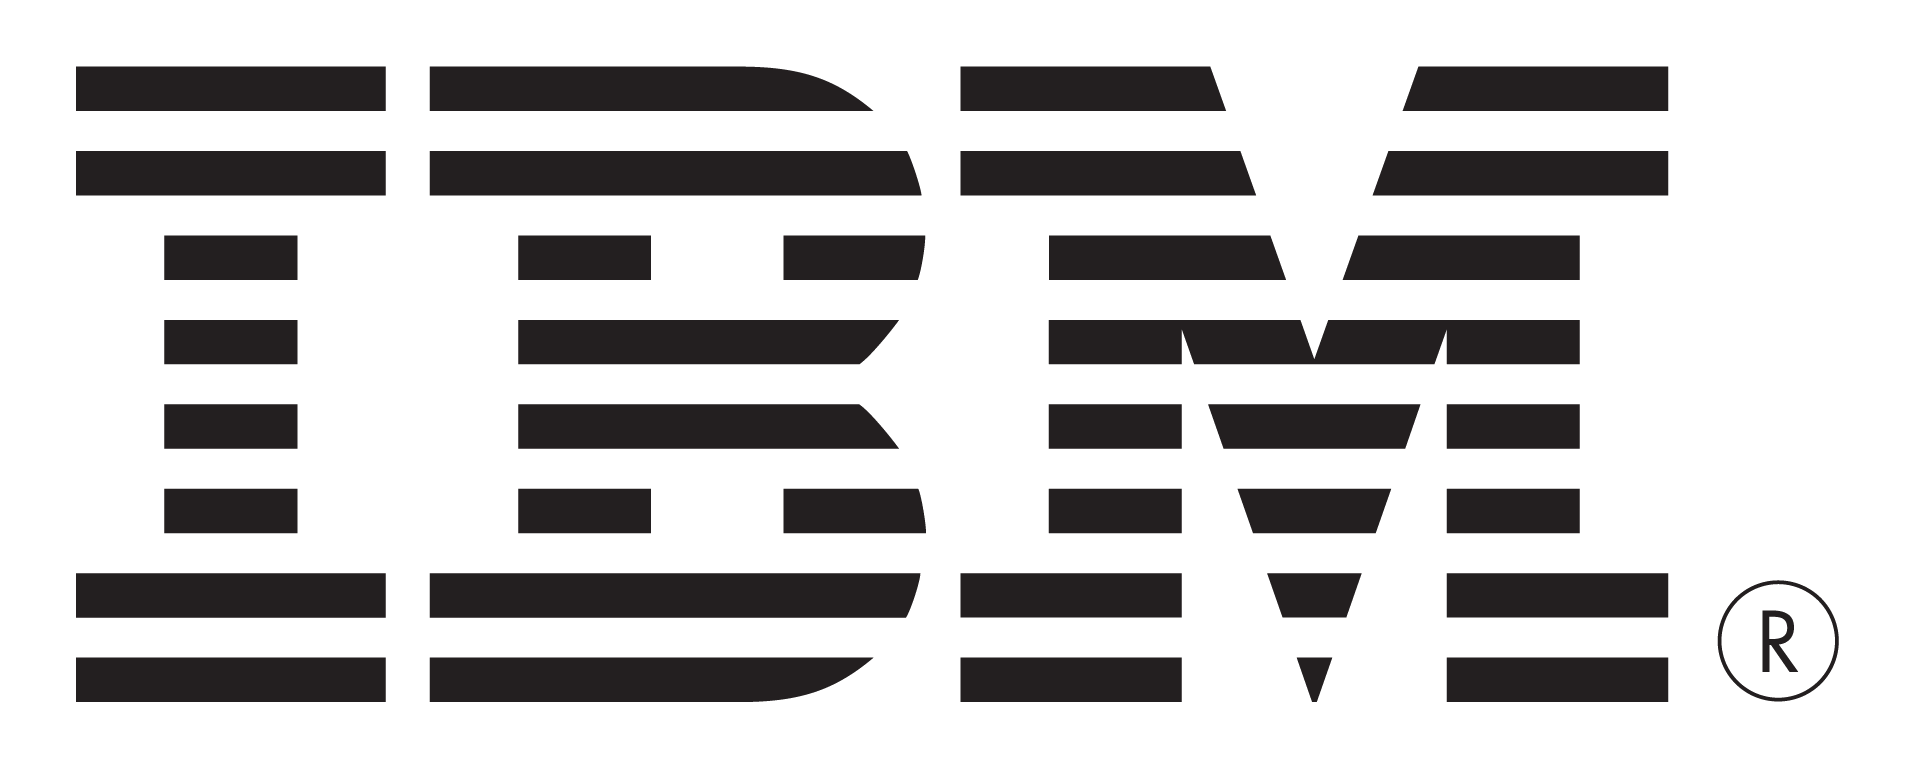 Official IBM Logo - IBM Logo PNG Image. Free transparent CC0 PNG Image Library